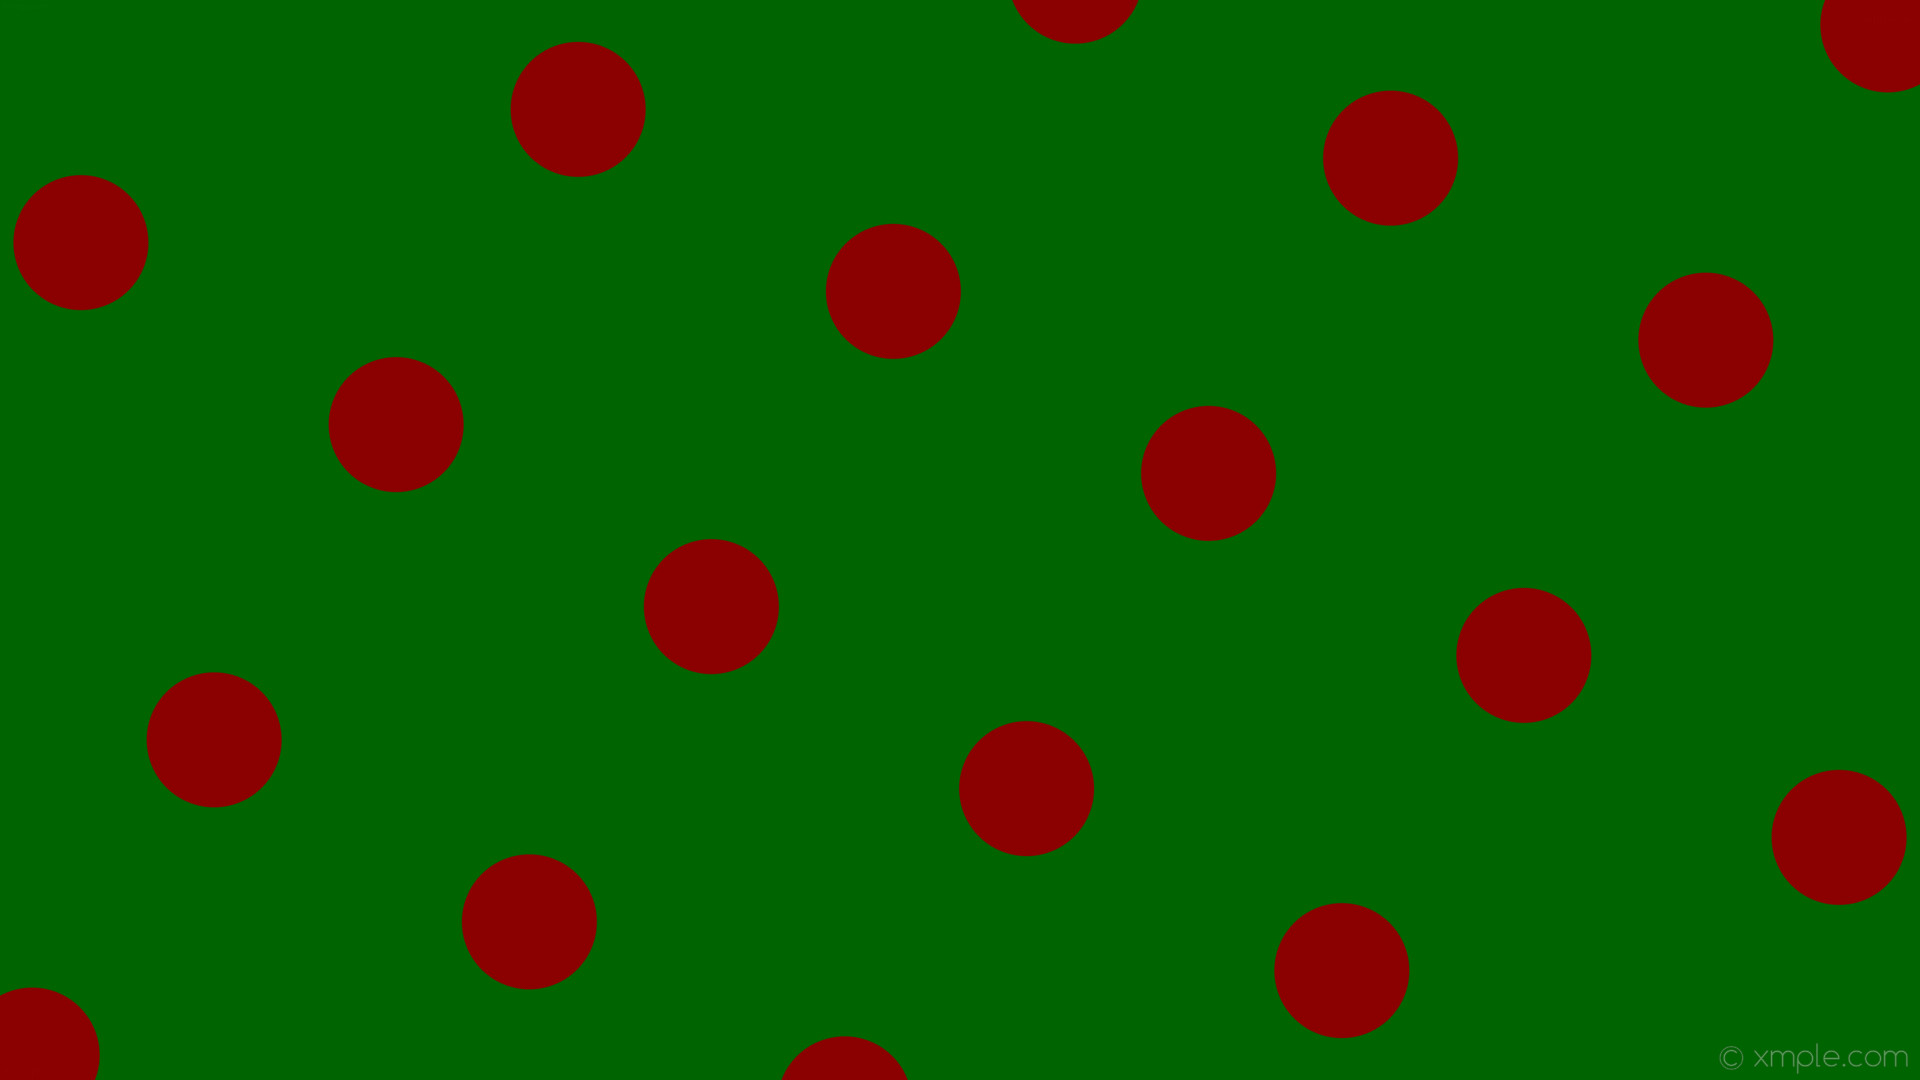 Wallpaper green polka dots red spots dark green dark red b0000 240